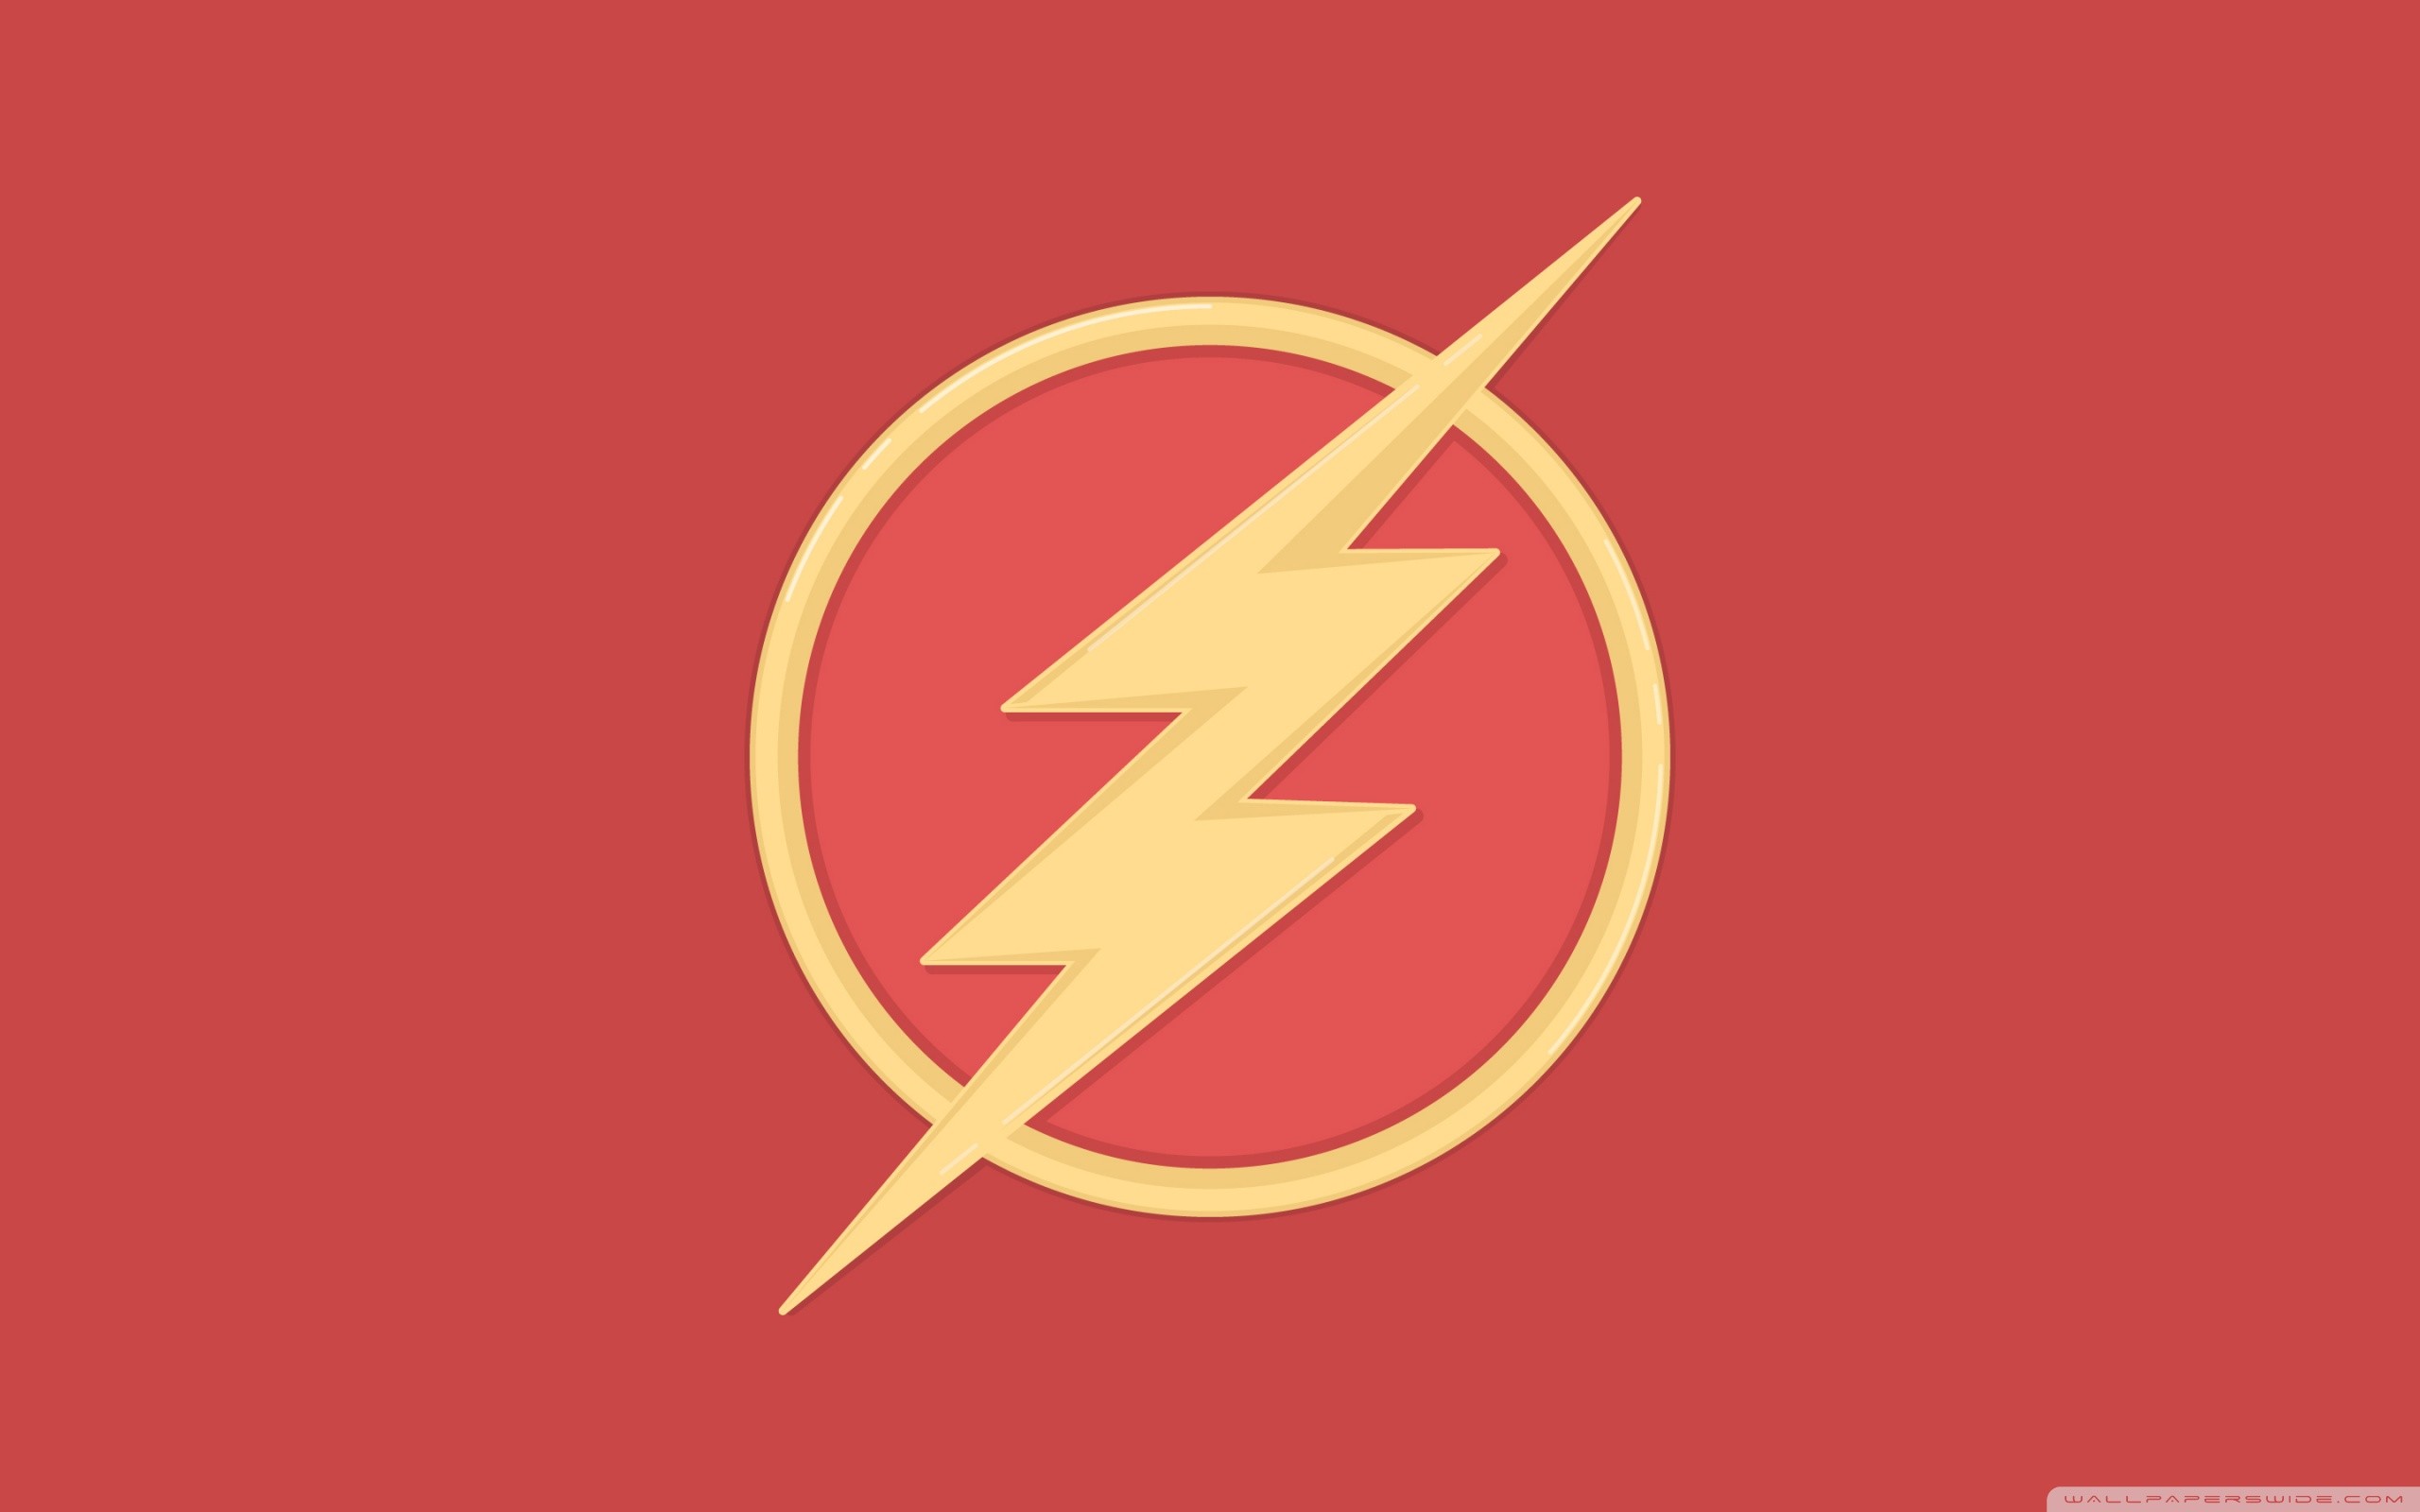 2560x1600 ... Best 25 Flash wallpaper ideas only on Pinterest | Flash comics .